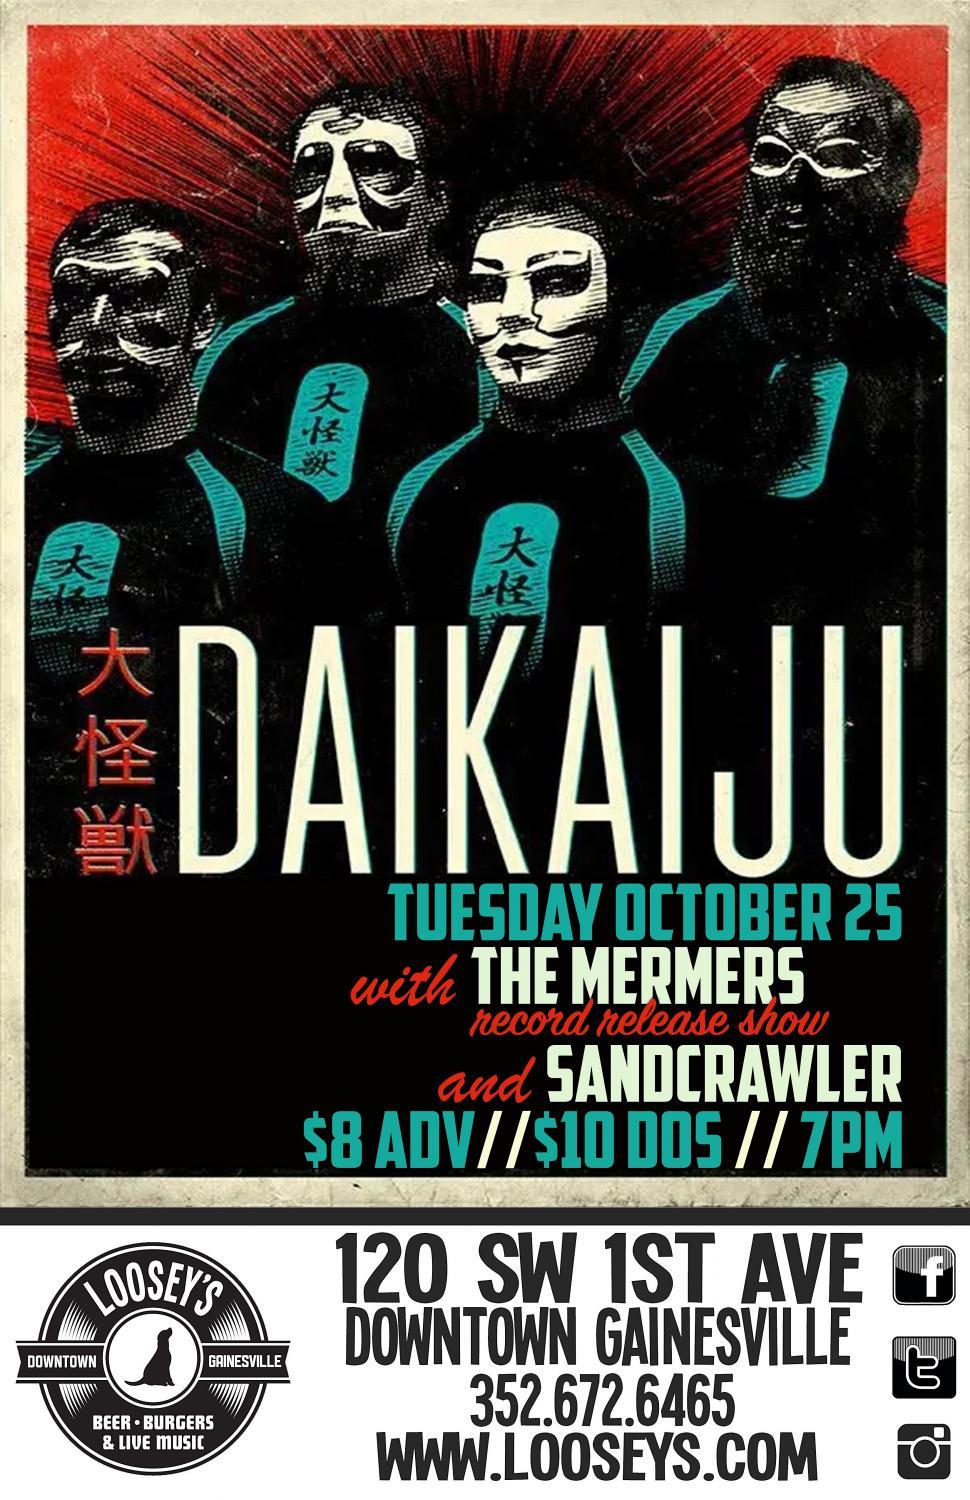 Daikaiju // The Mermers // Sandcrawler
Tue Oct 25, 7:00 PM - Tue Oct 25, 11:00 PM
in 5 days